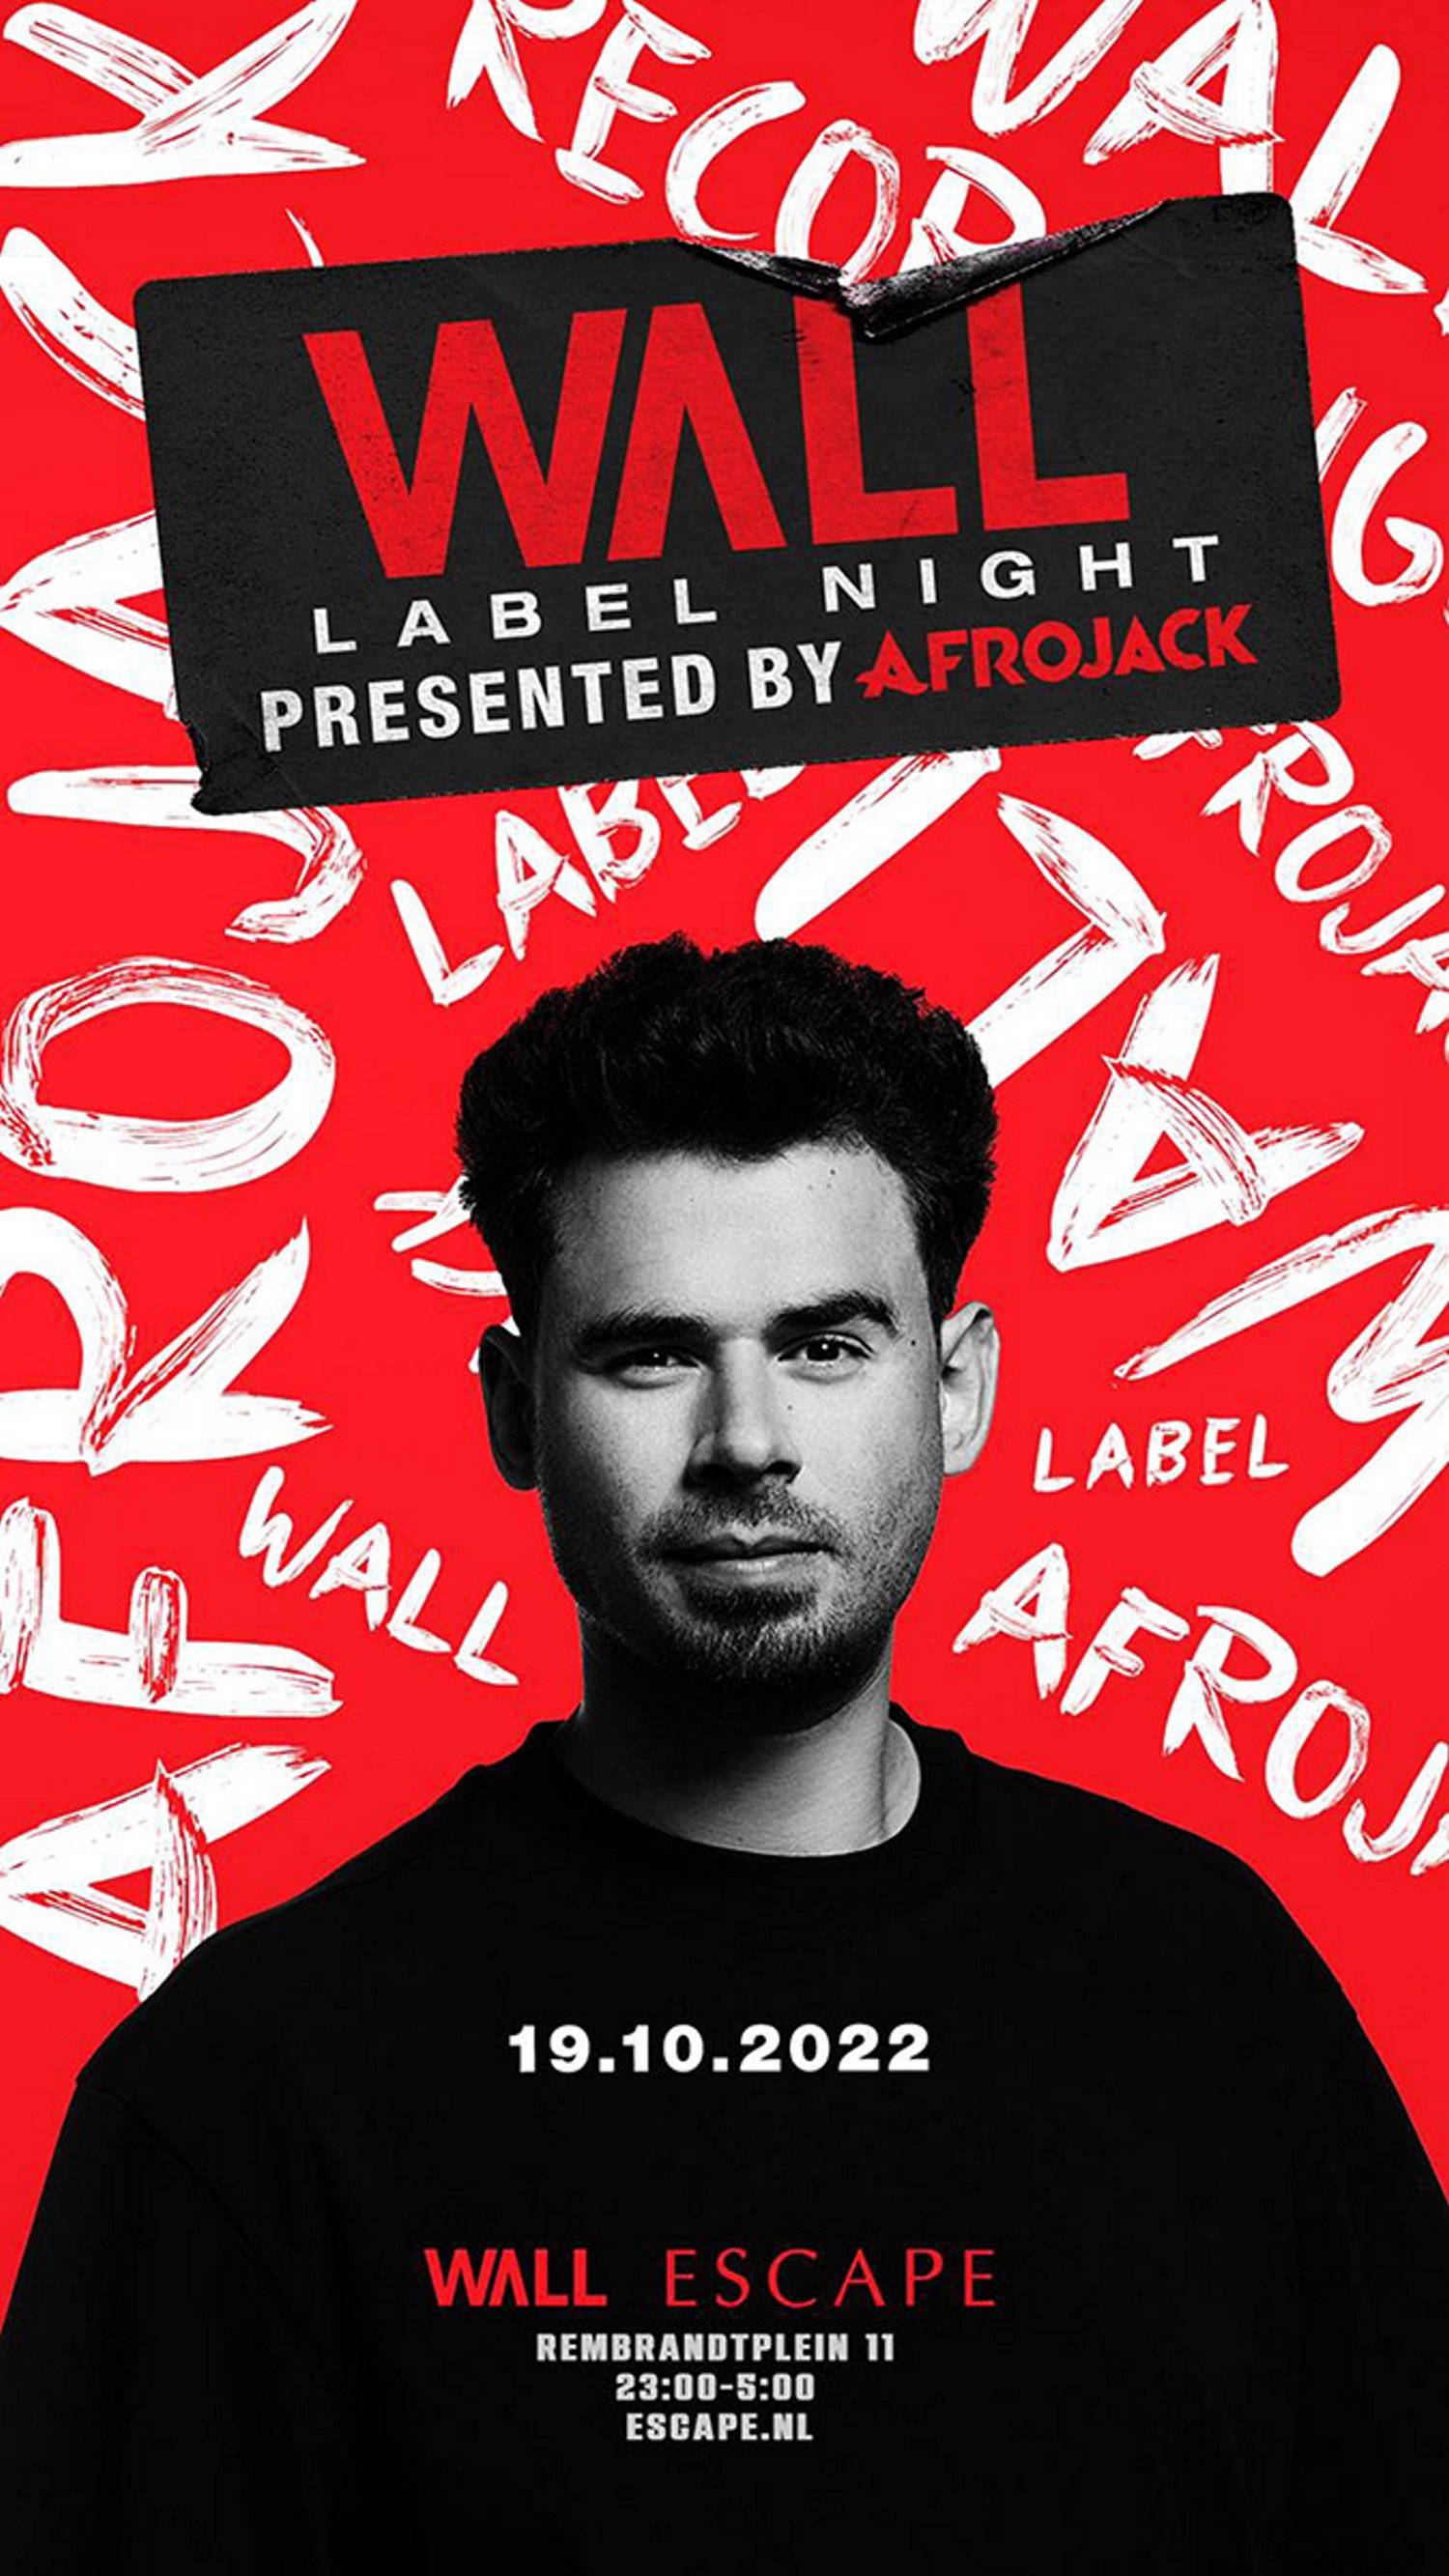 Afrojack presents Wall Label Night